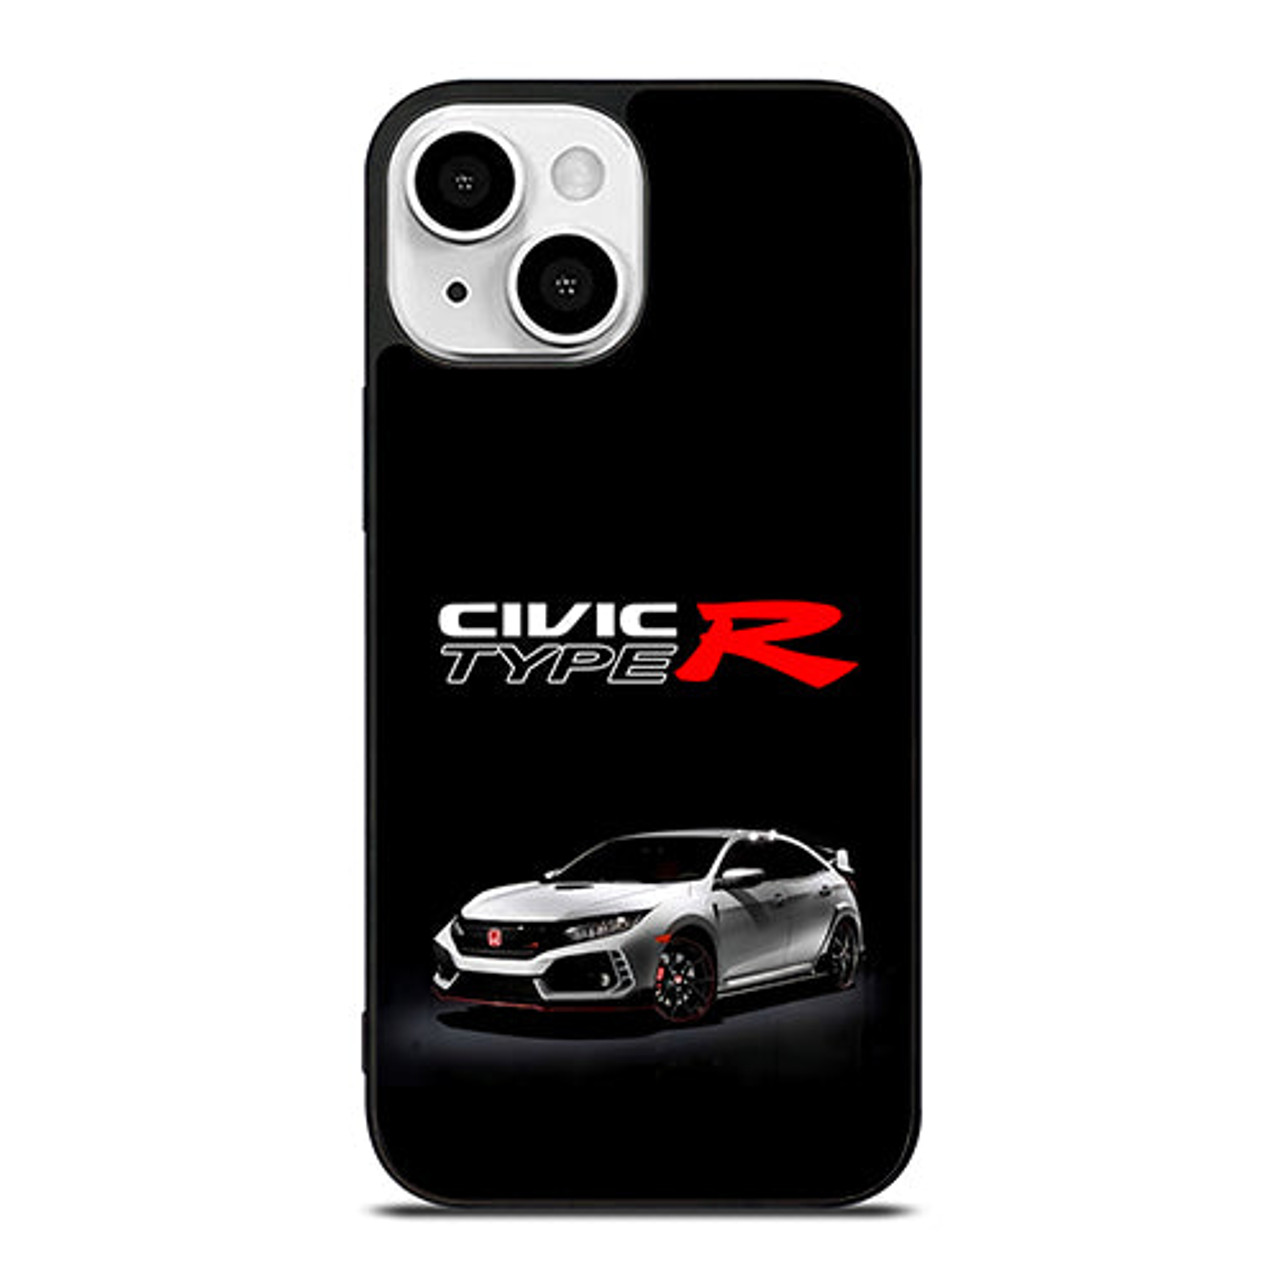 Honda Civic Type R Iphone Wallpapers